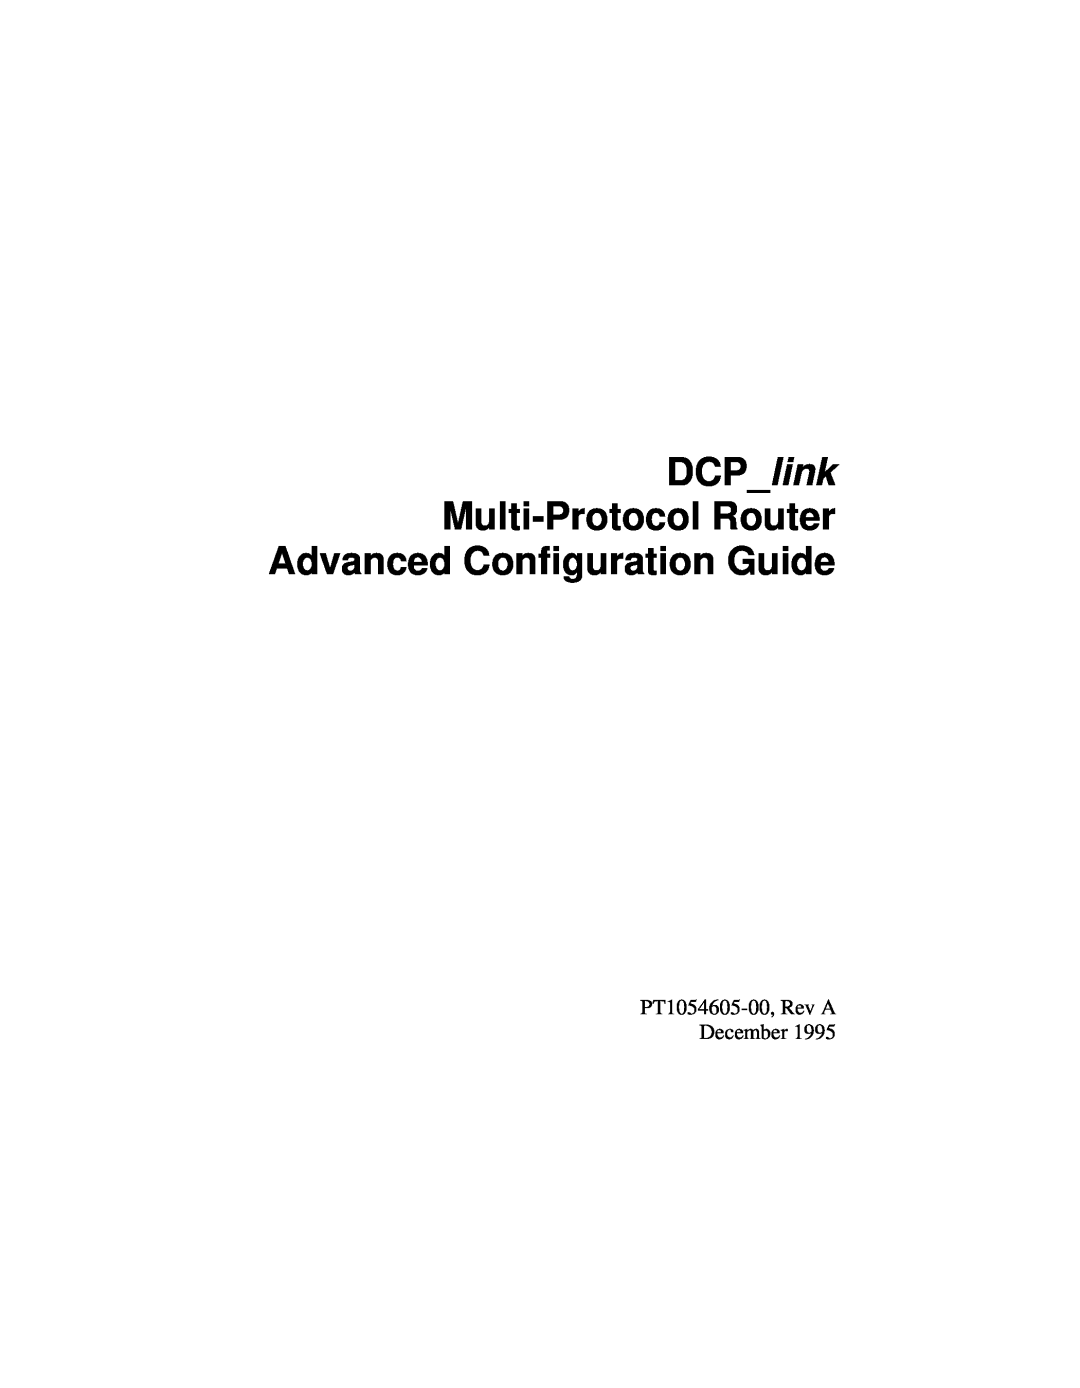 Emulex DCP_link manual DCPlink Multi-Protocol Router Advanced Configuration Guide, PT1054605-00, Rev A December 